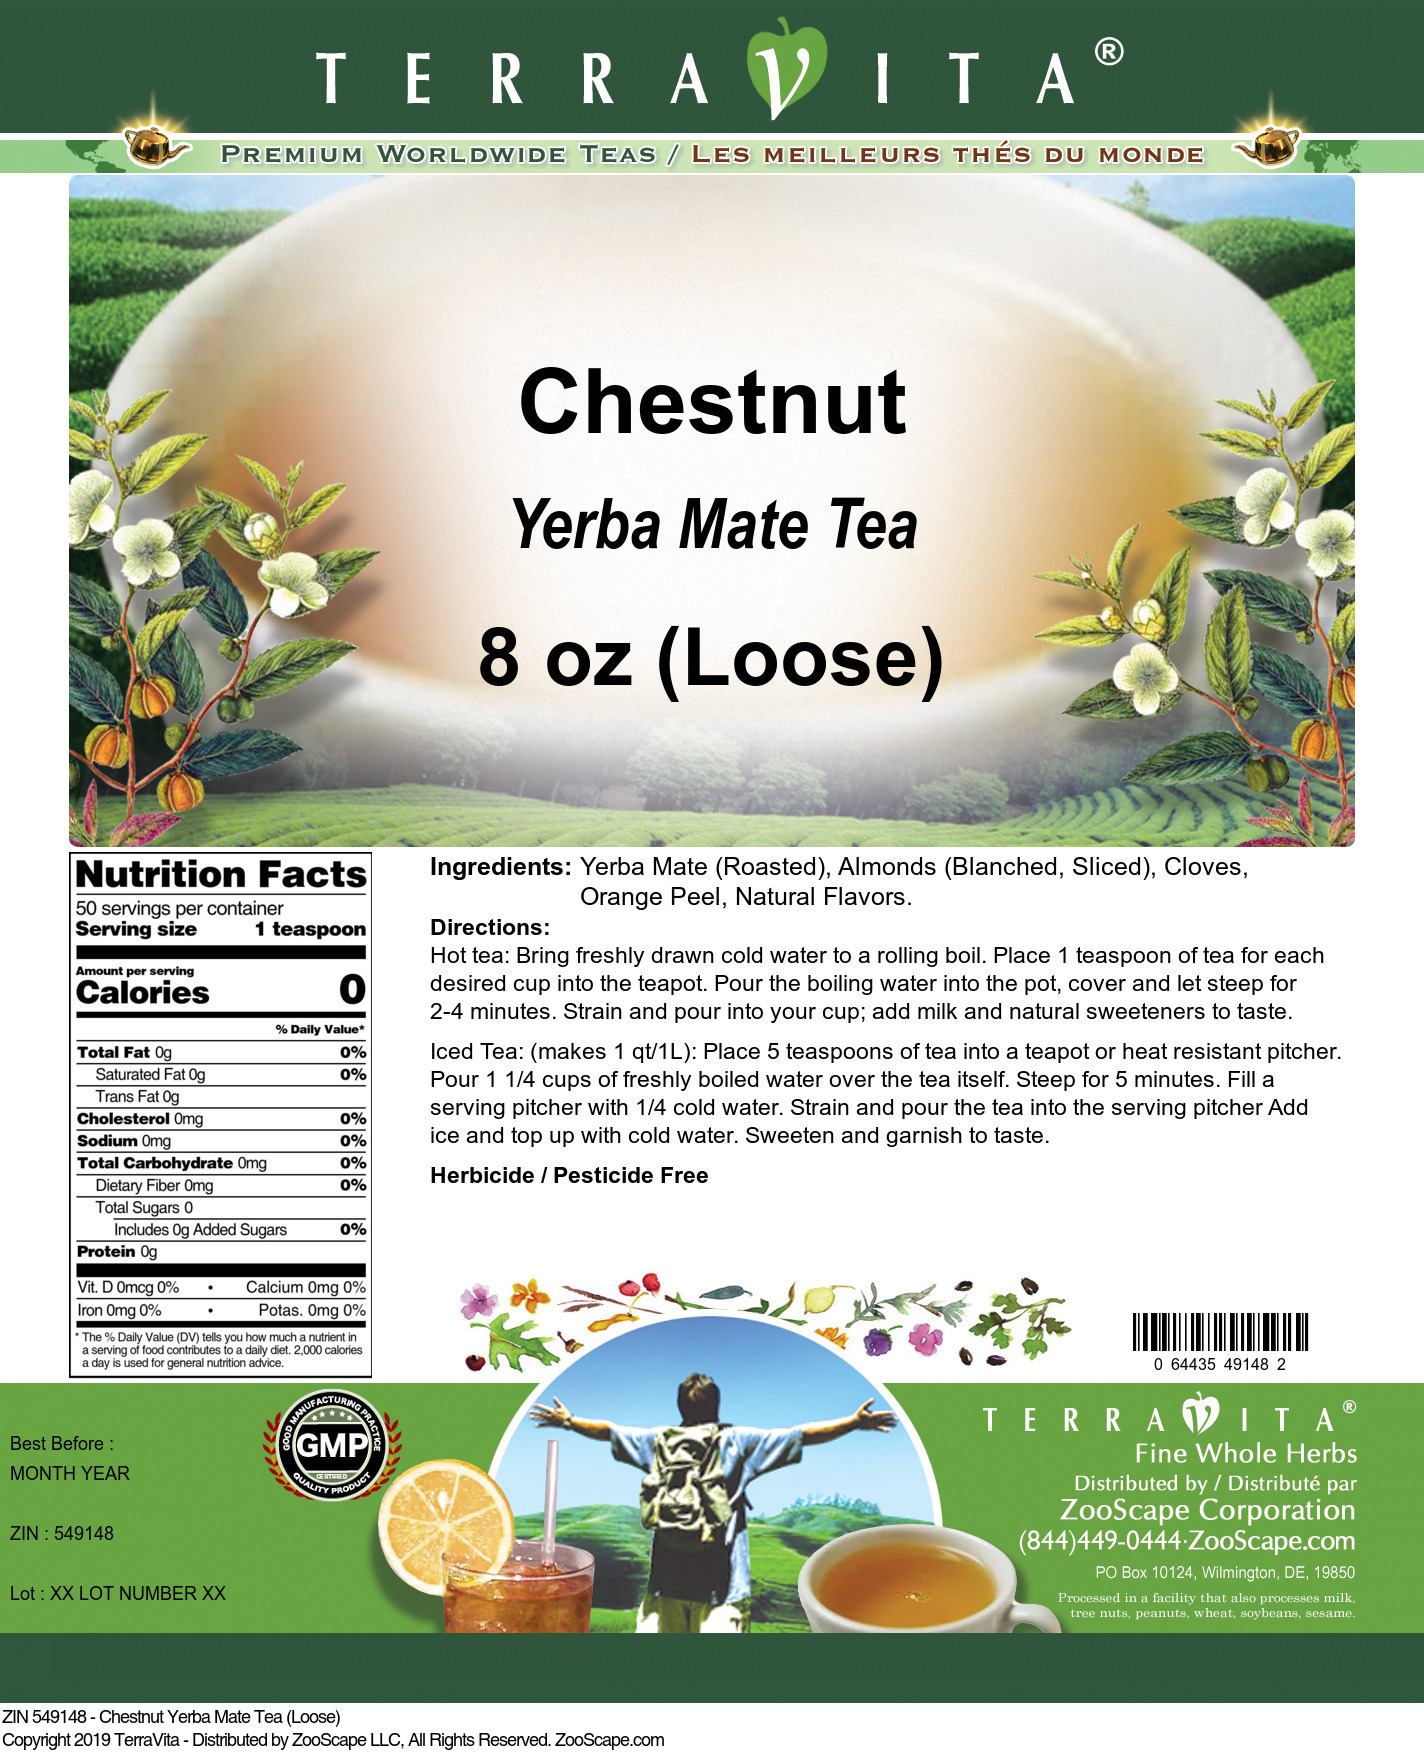 Chestnut Yerba Mate Tea (Loose) - Label